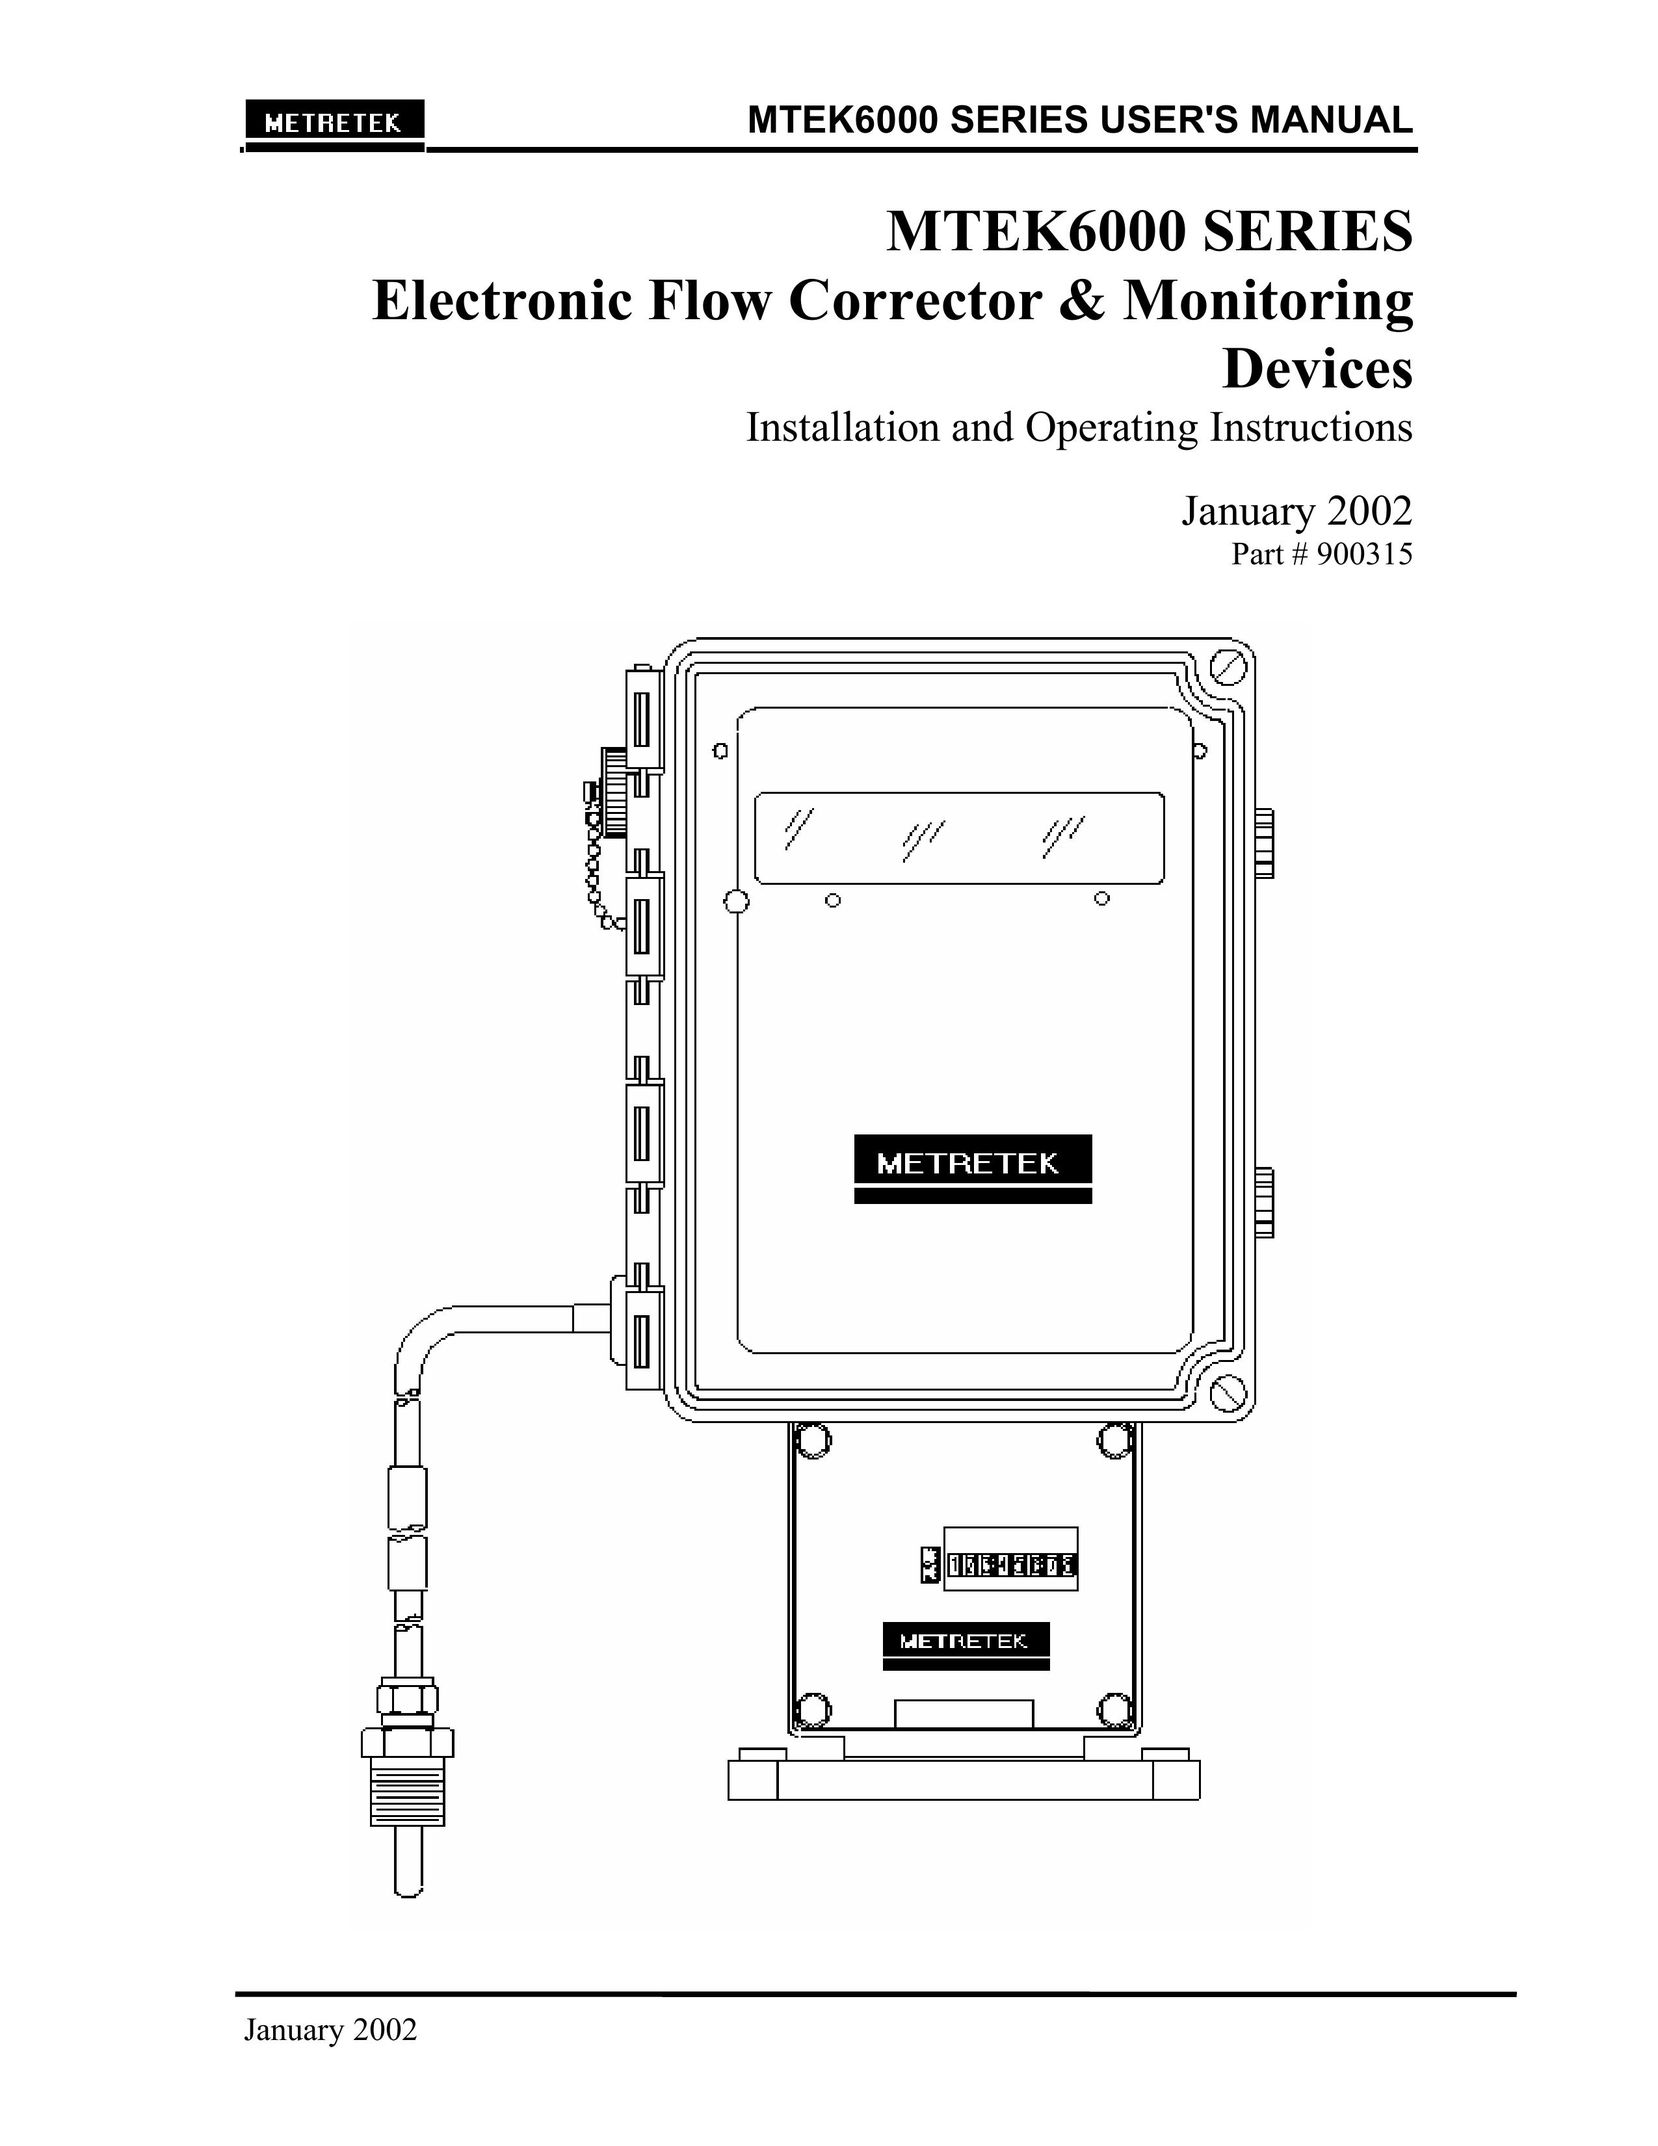 Compaq MTEK6000 Network Router User Manual